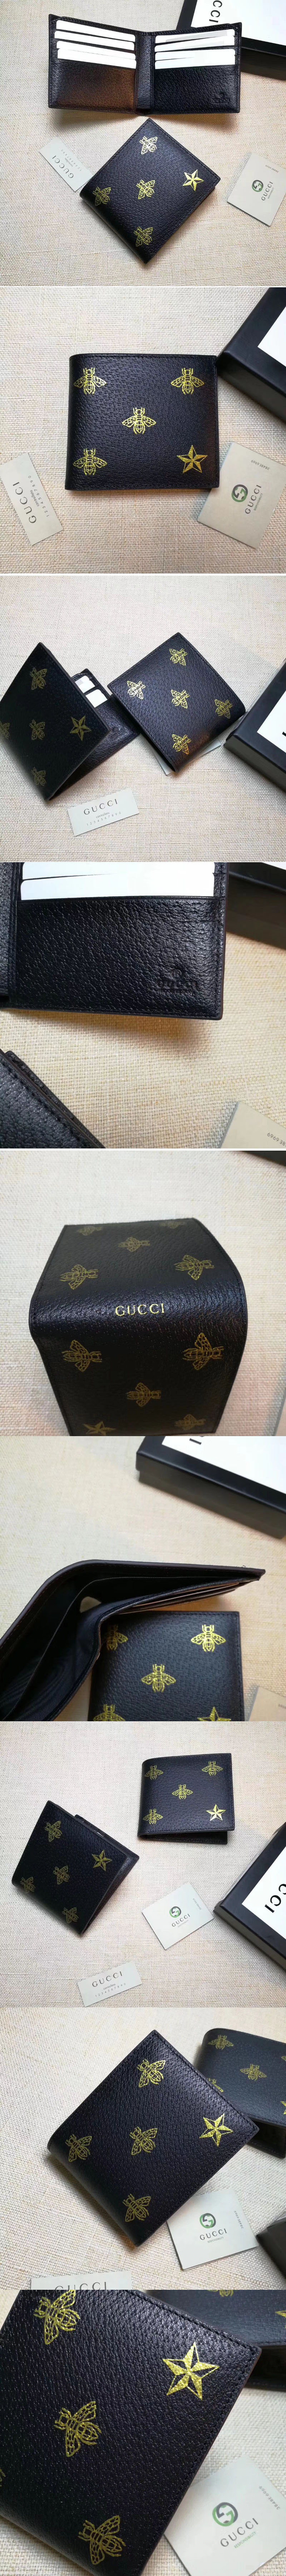 Replica Gucci 495055 Bee Star leather bi-fold wallet